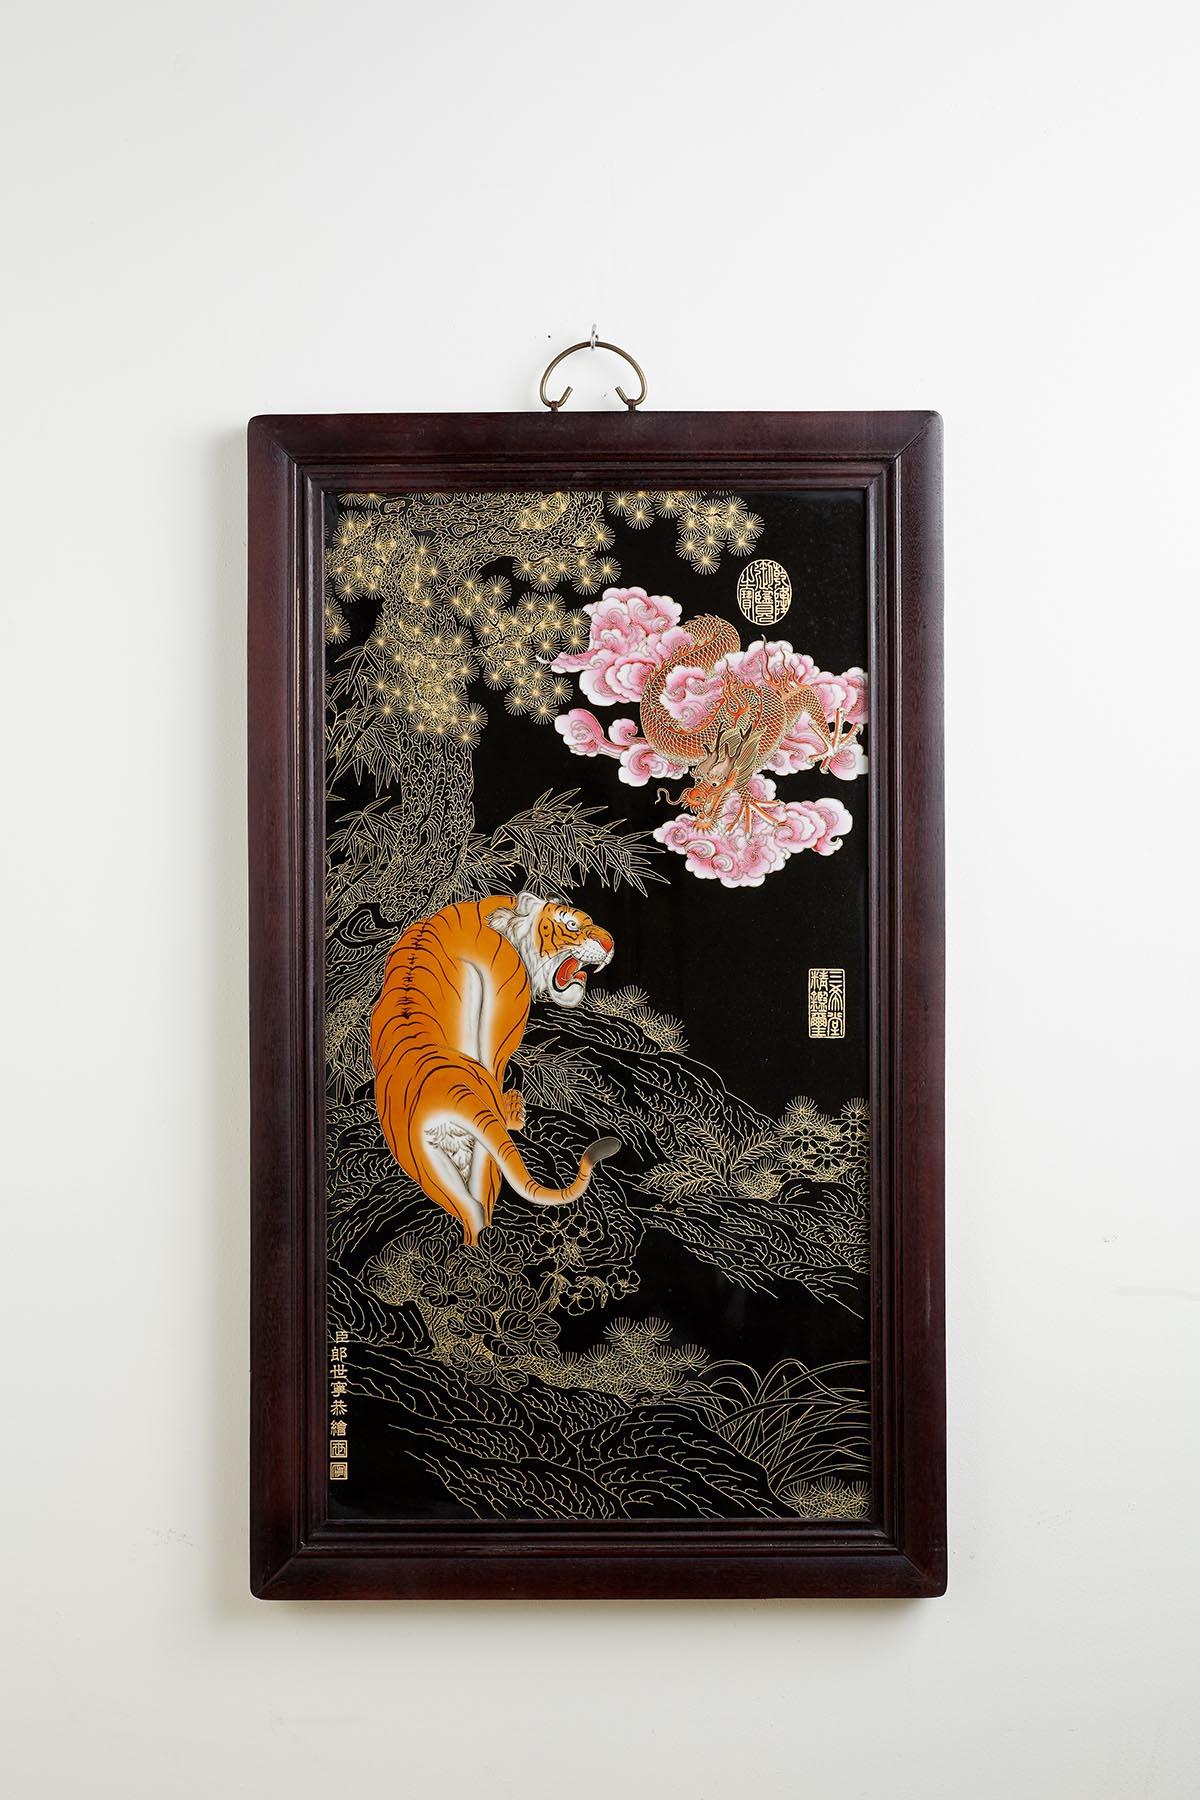 Set of Four Qing Style Painted Porcelain Panels (Handgefertigt)